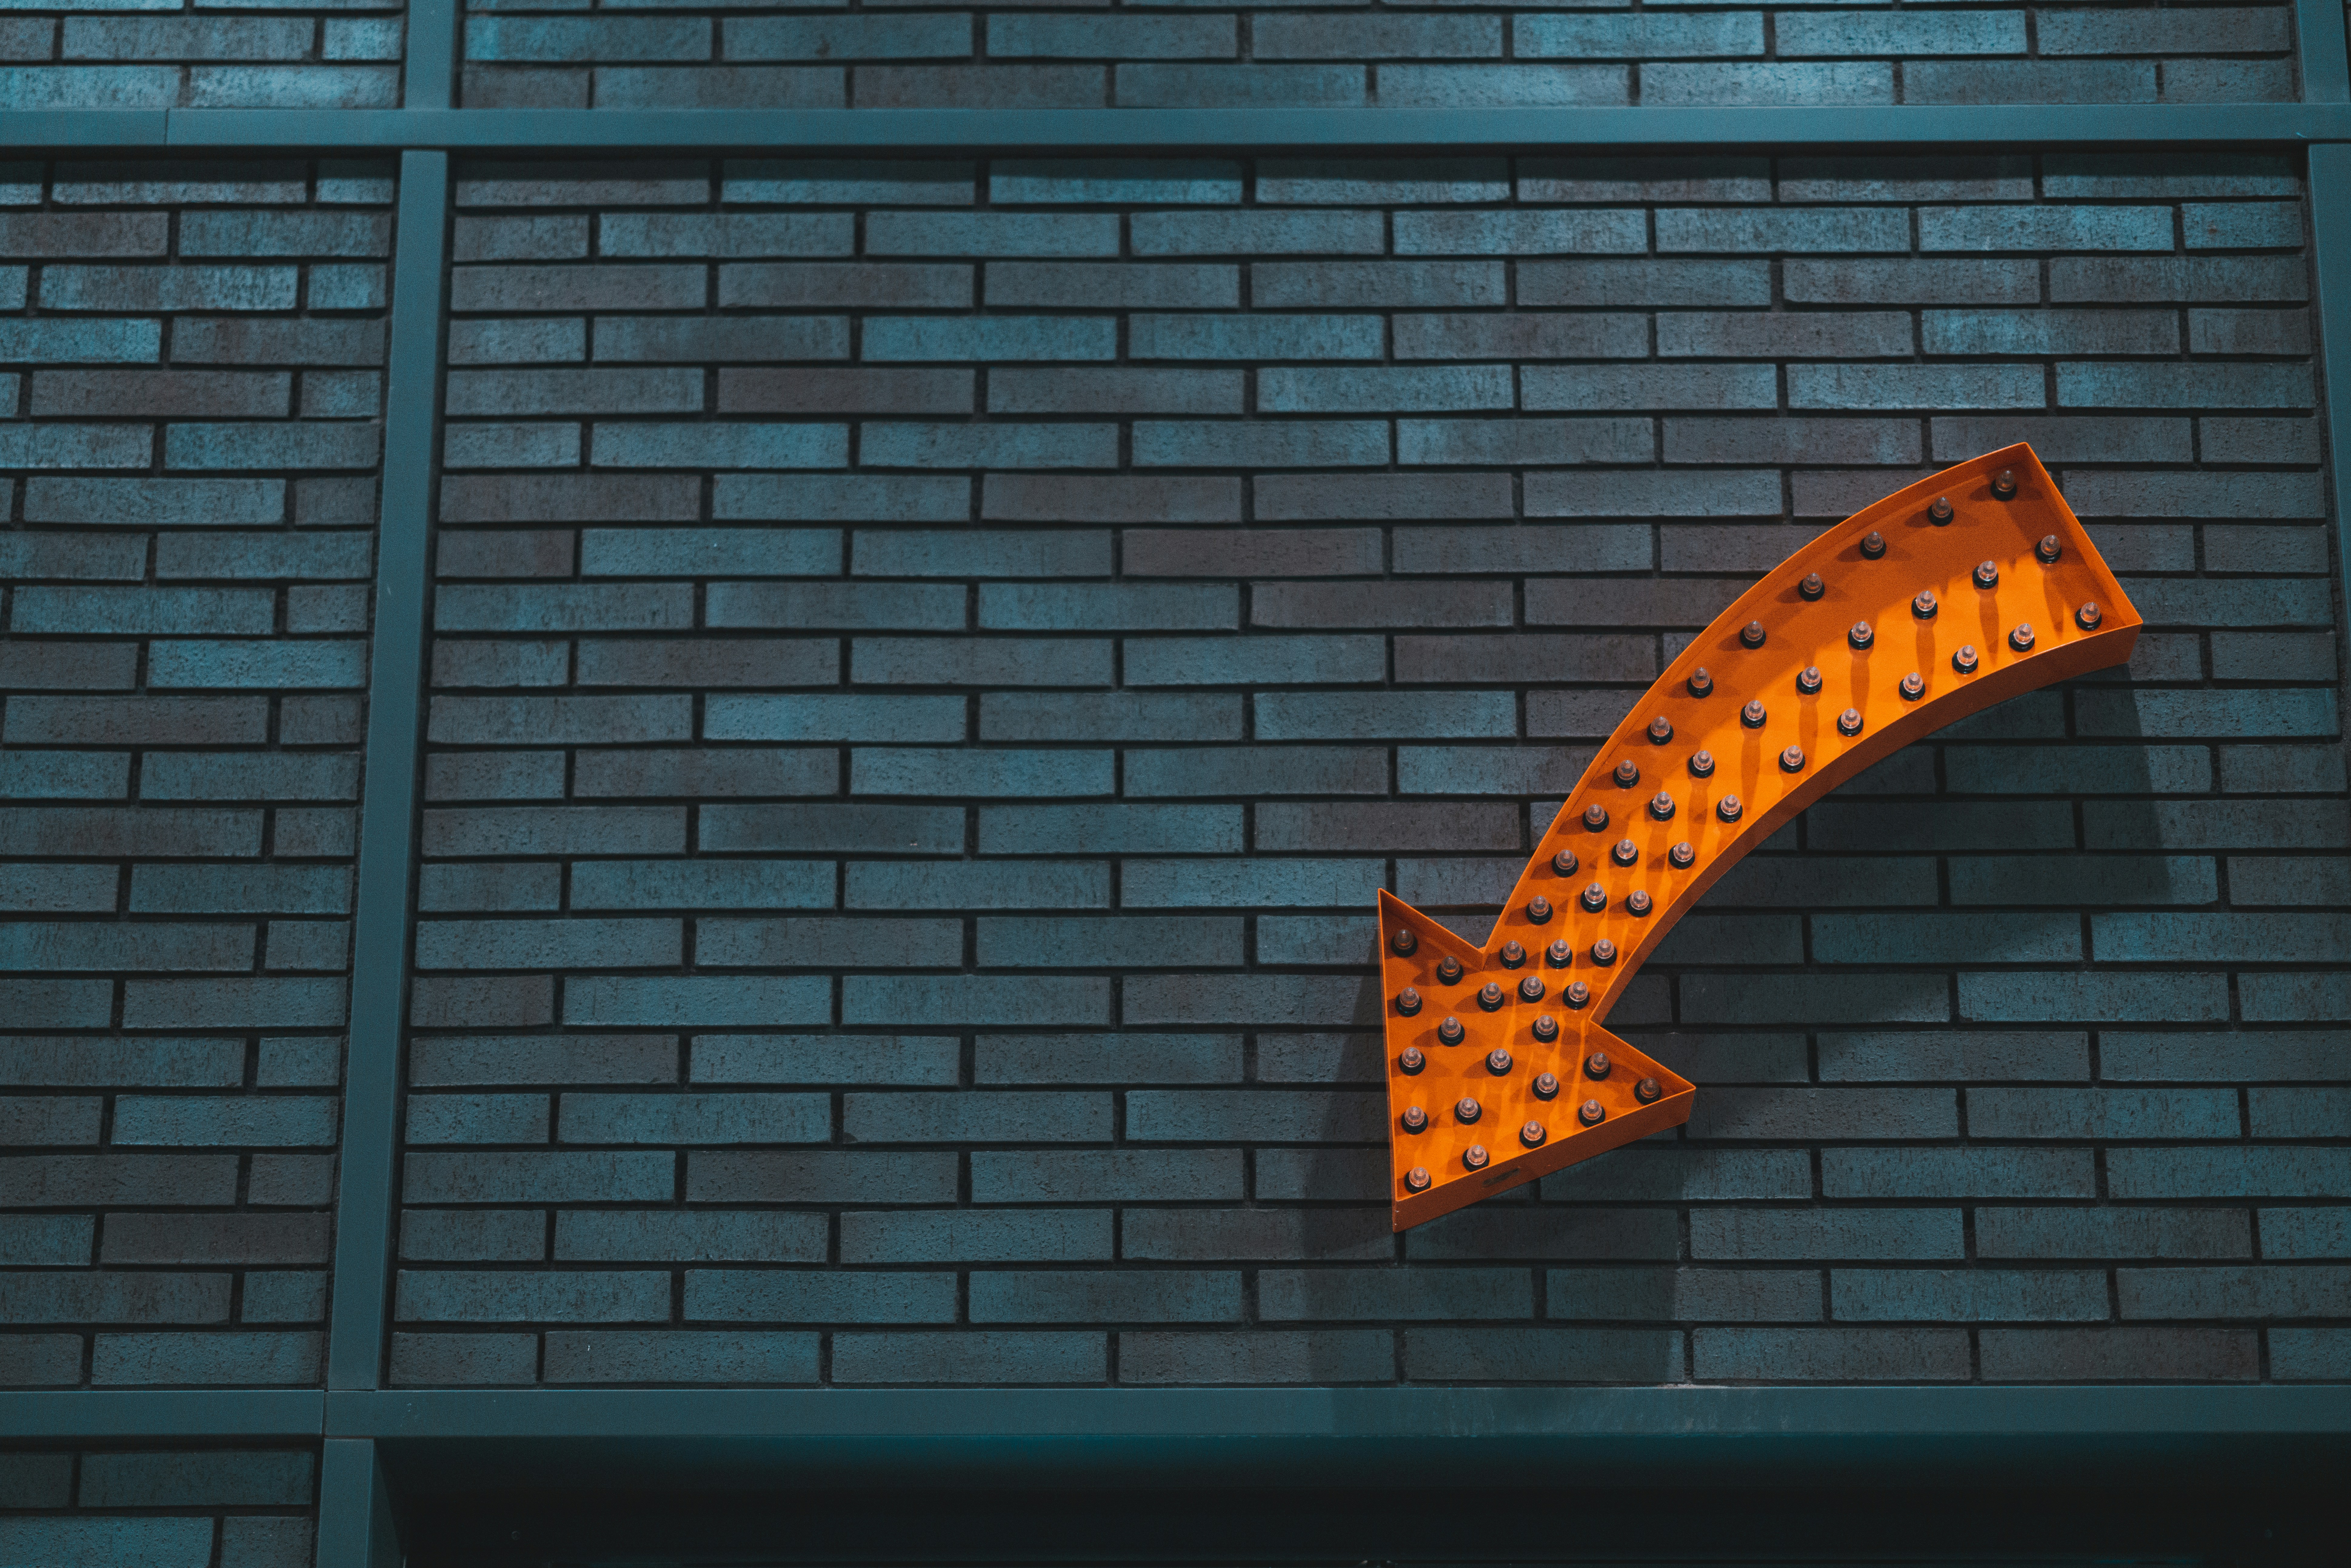 Decorative image: A lit-up orange arrow on a brick wall.